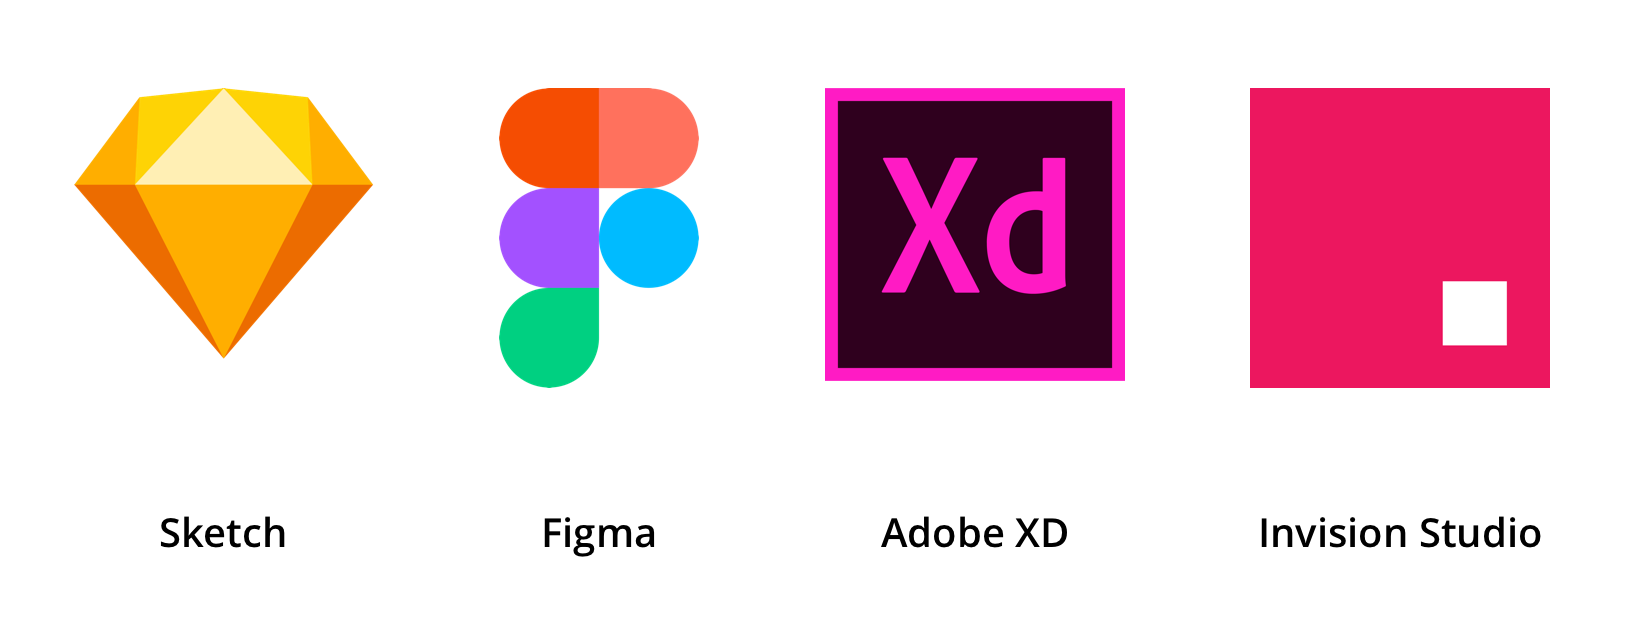 Logos de différents logiciels de webdesign : Sketch, Figma, Adobe XD et Invision Studio